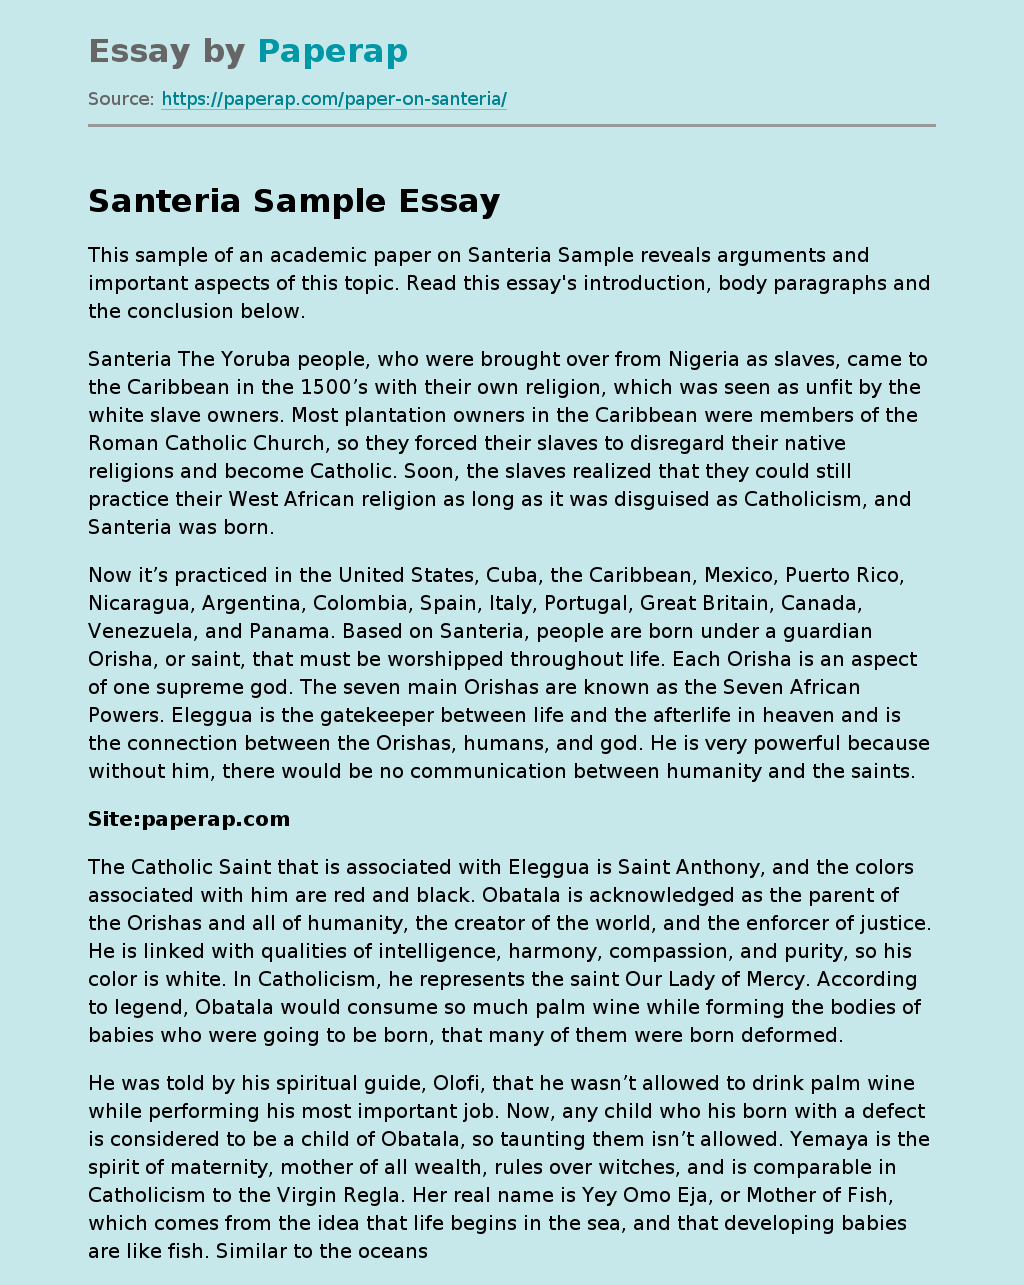 Santeria Sample